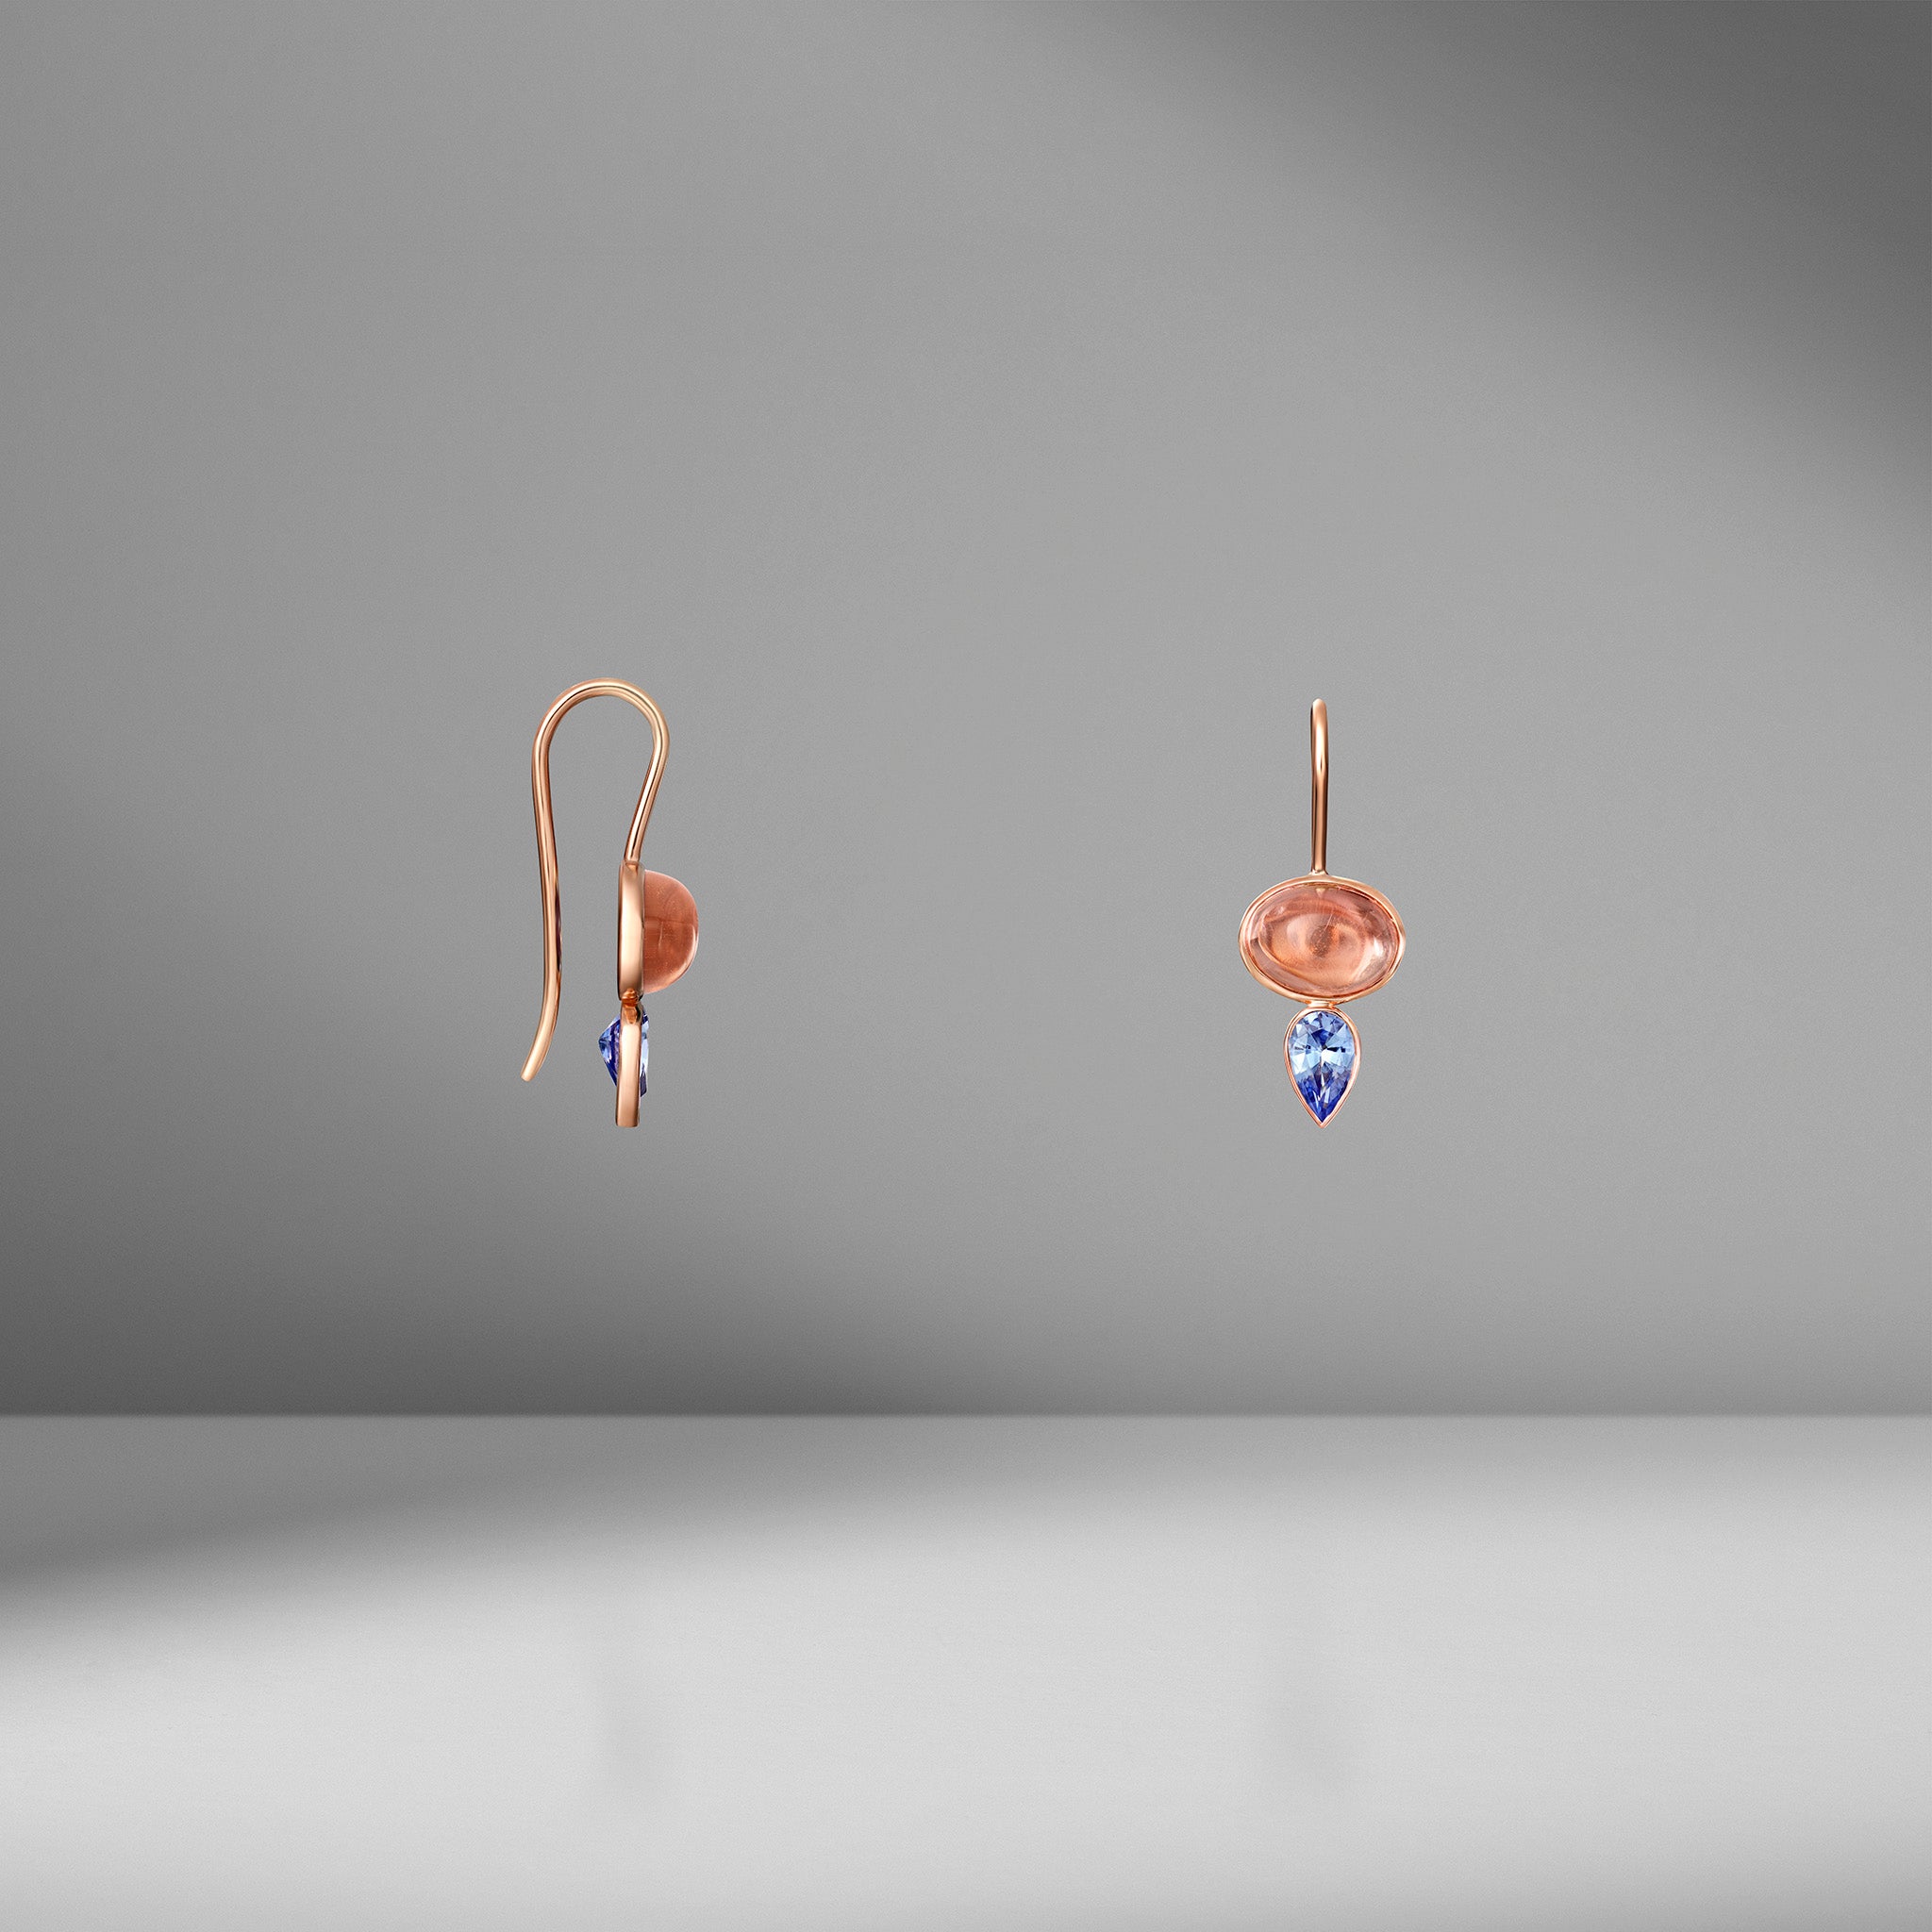 The Peach Astrid Earrings